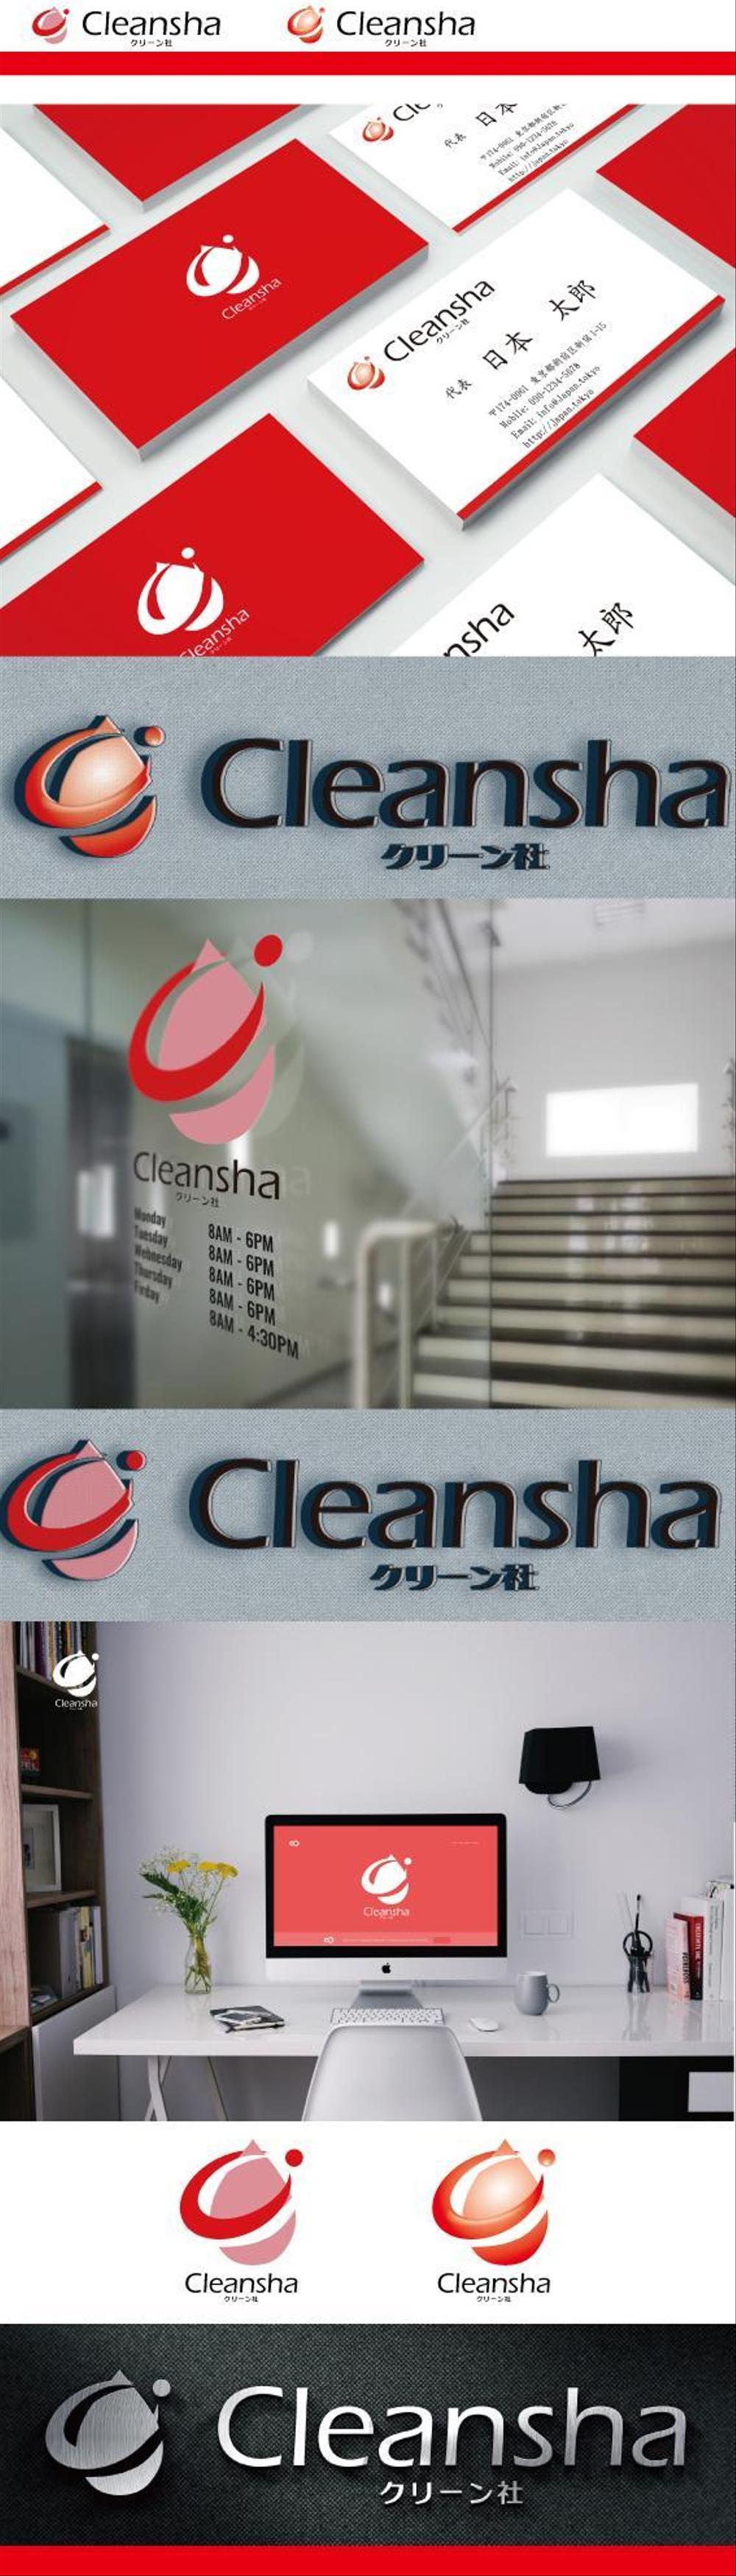 Cleanshaさま4.jpg